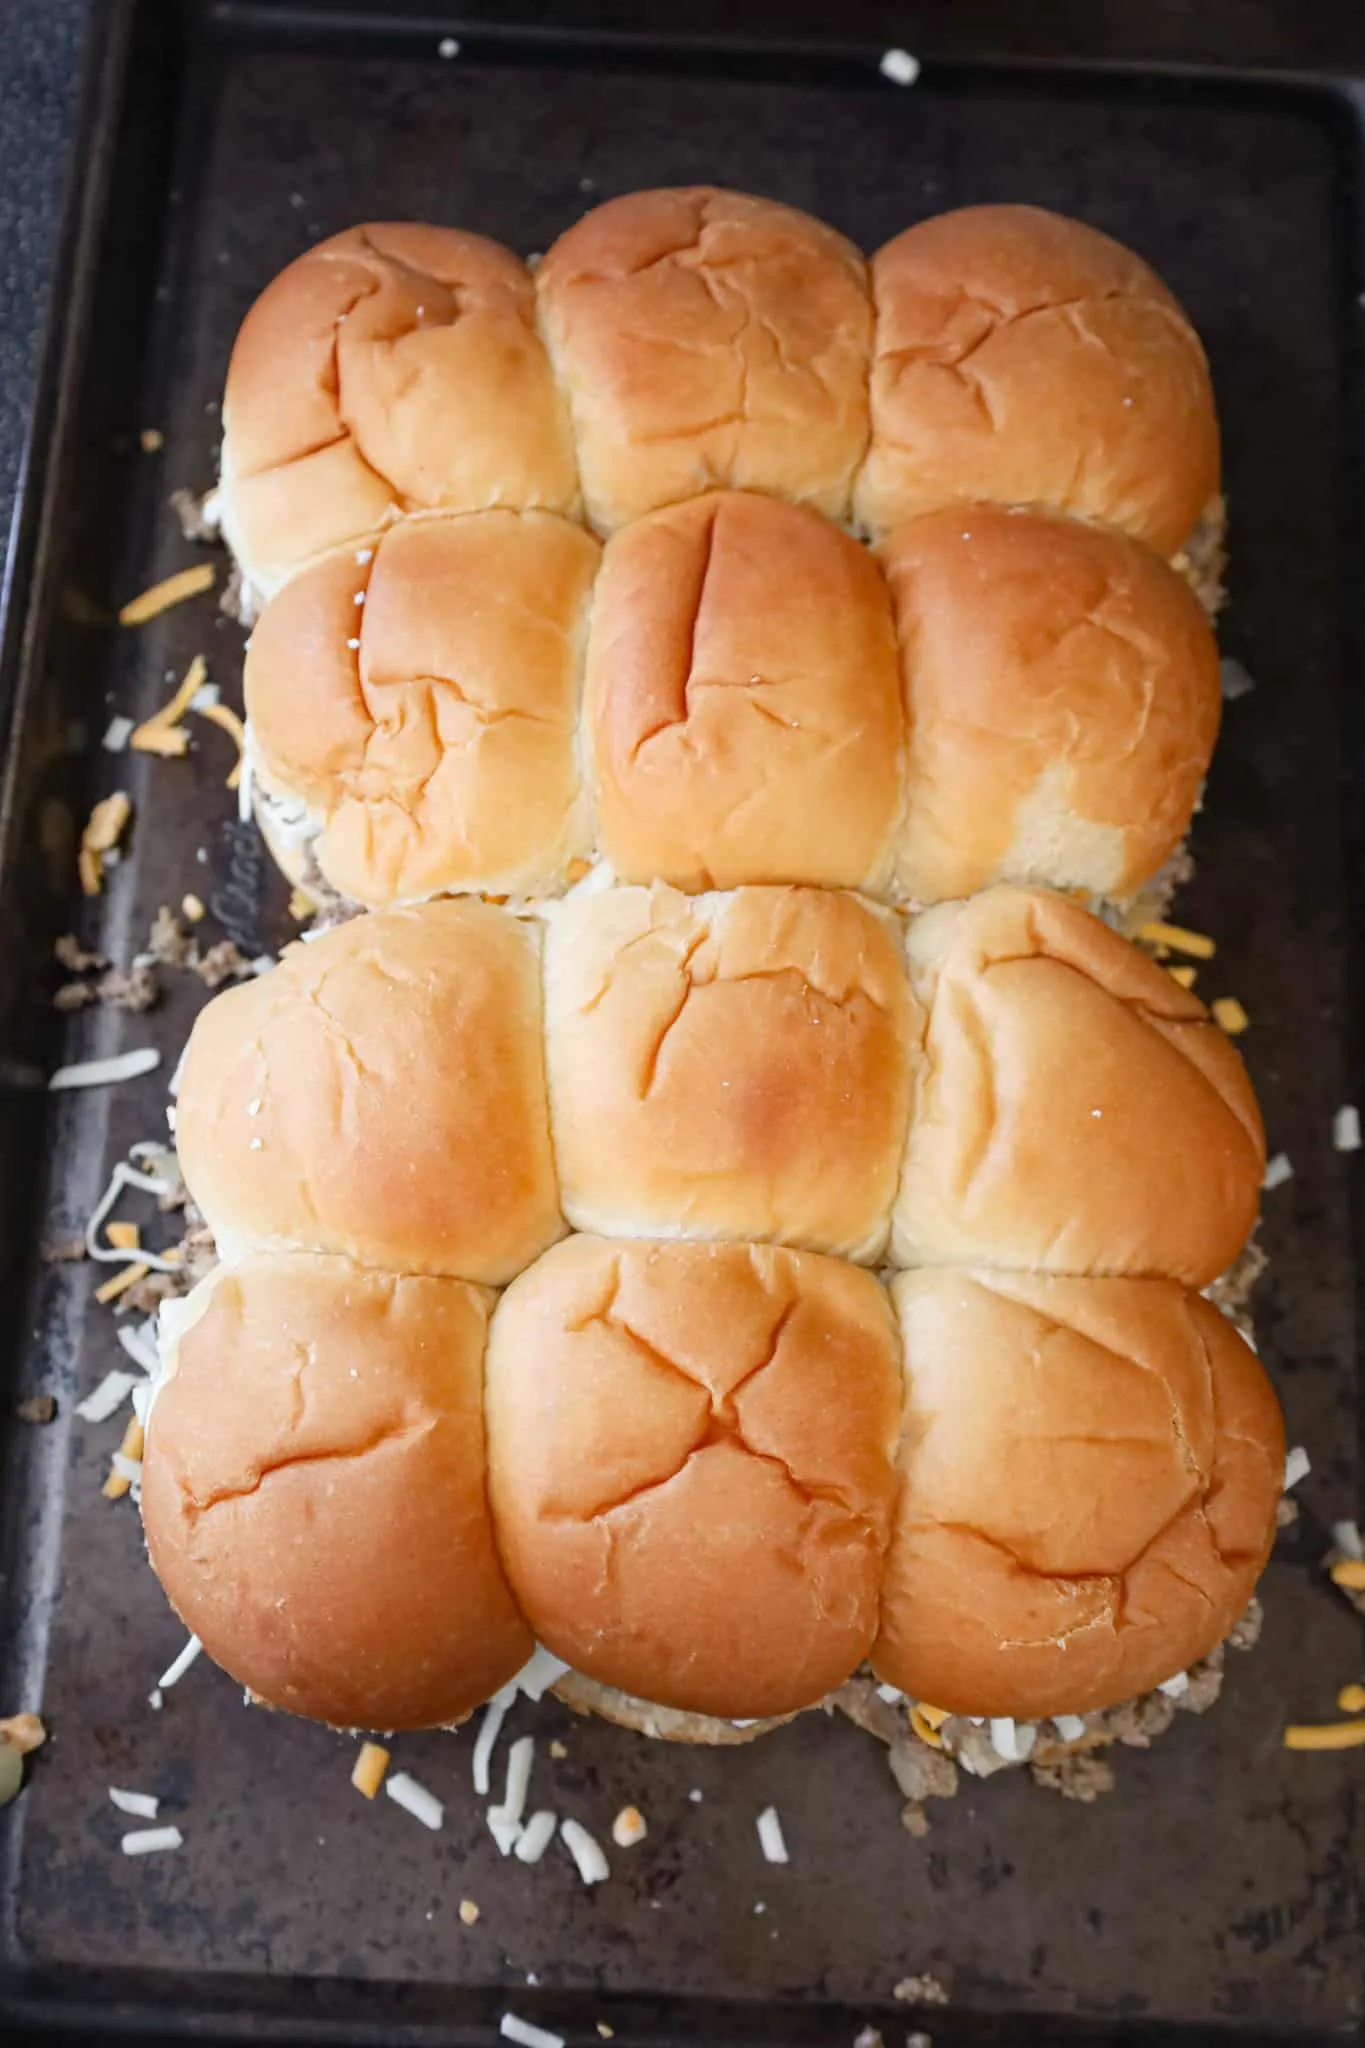 cheeseburger sliders on a baking sheet before baking